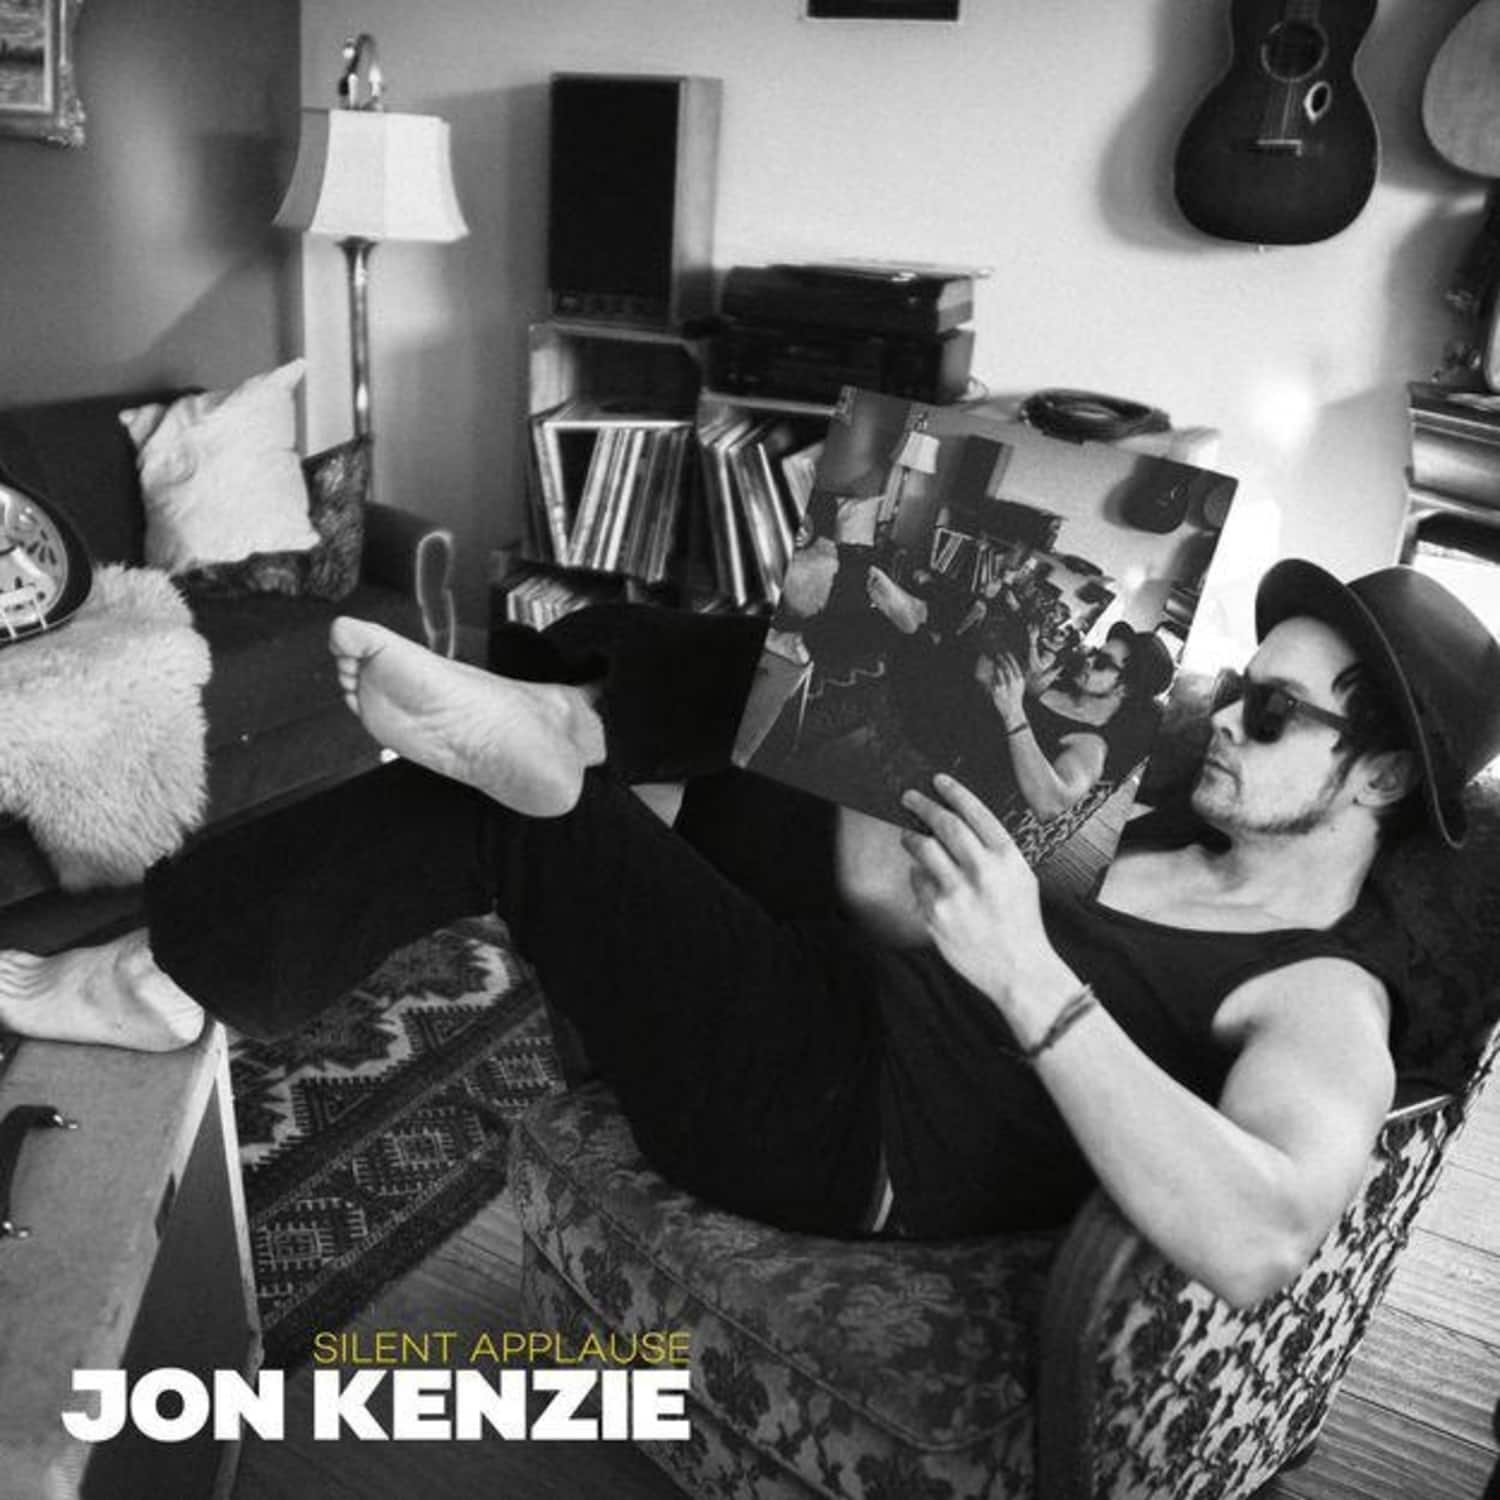  Jon Kenzie - SILENT APPLAUSE 